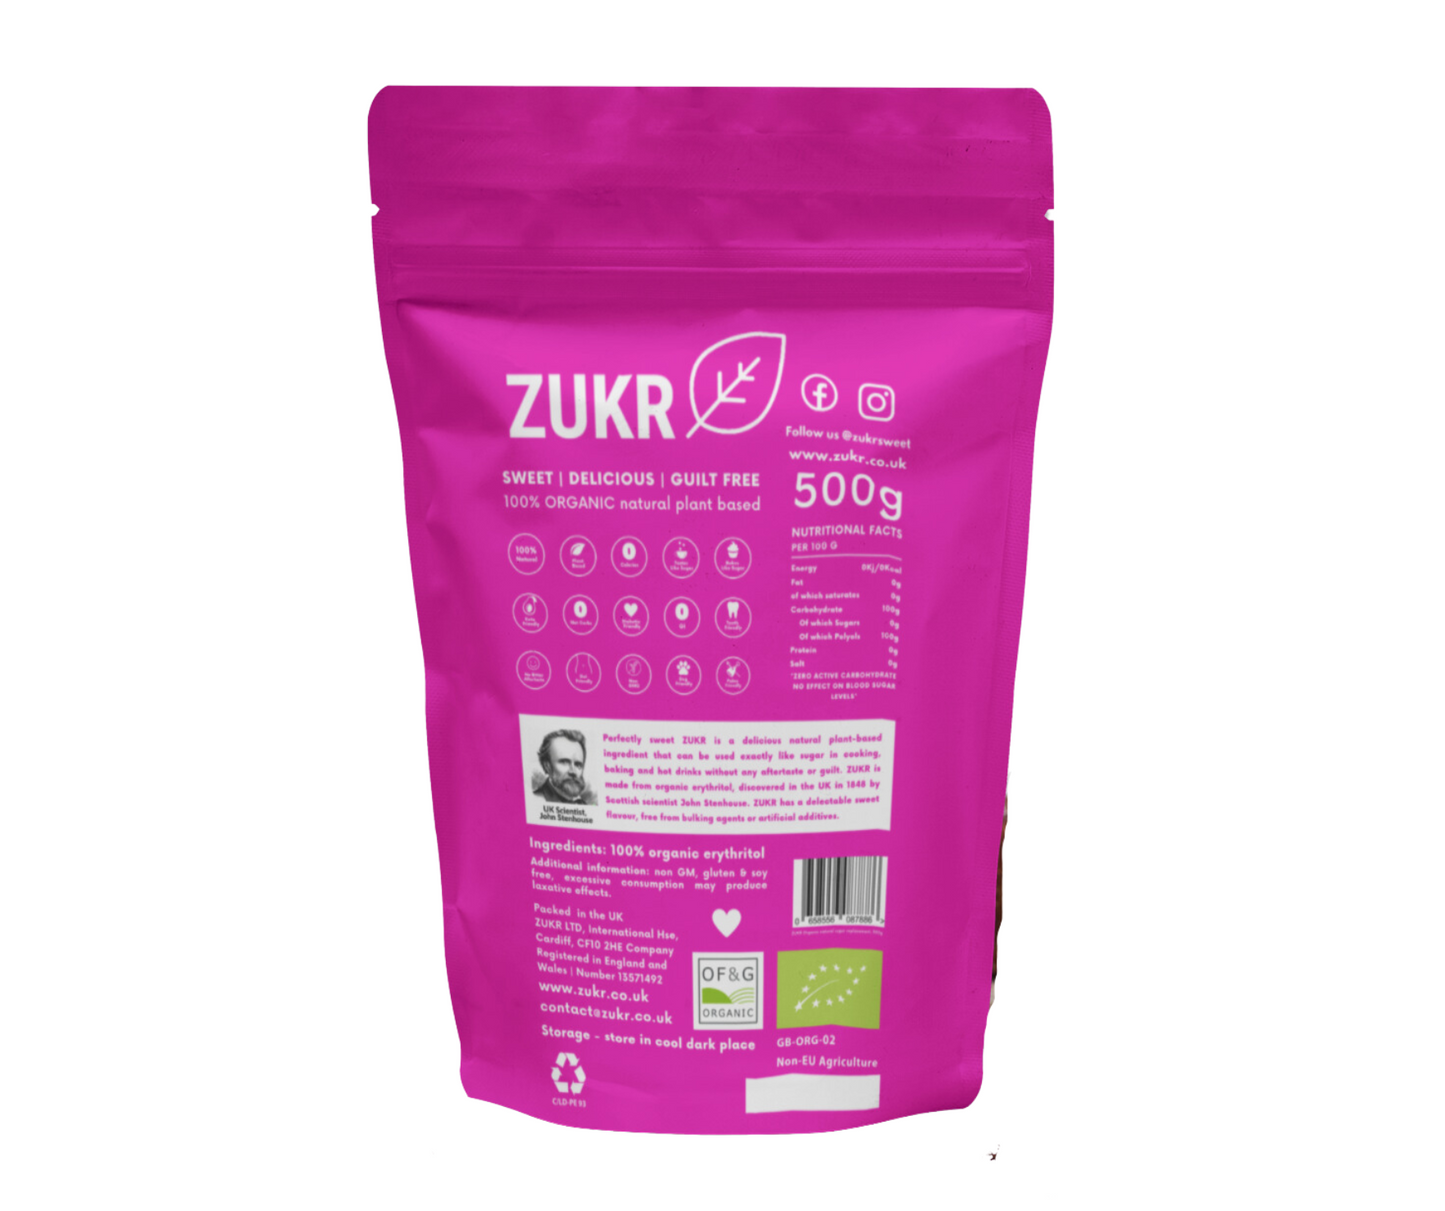 500g ZUKR Natural Organic Sugar Replacement, a zero-calorie, zero-GI sugar alternative perfect for healthy cooking and baking.